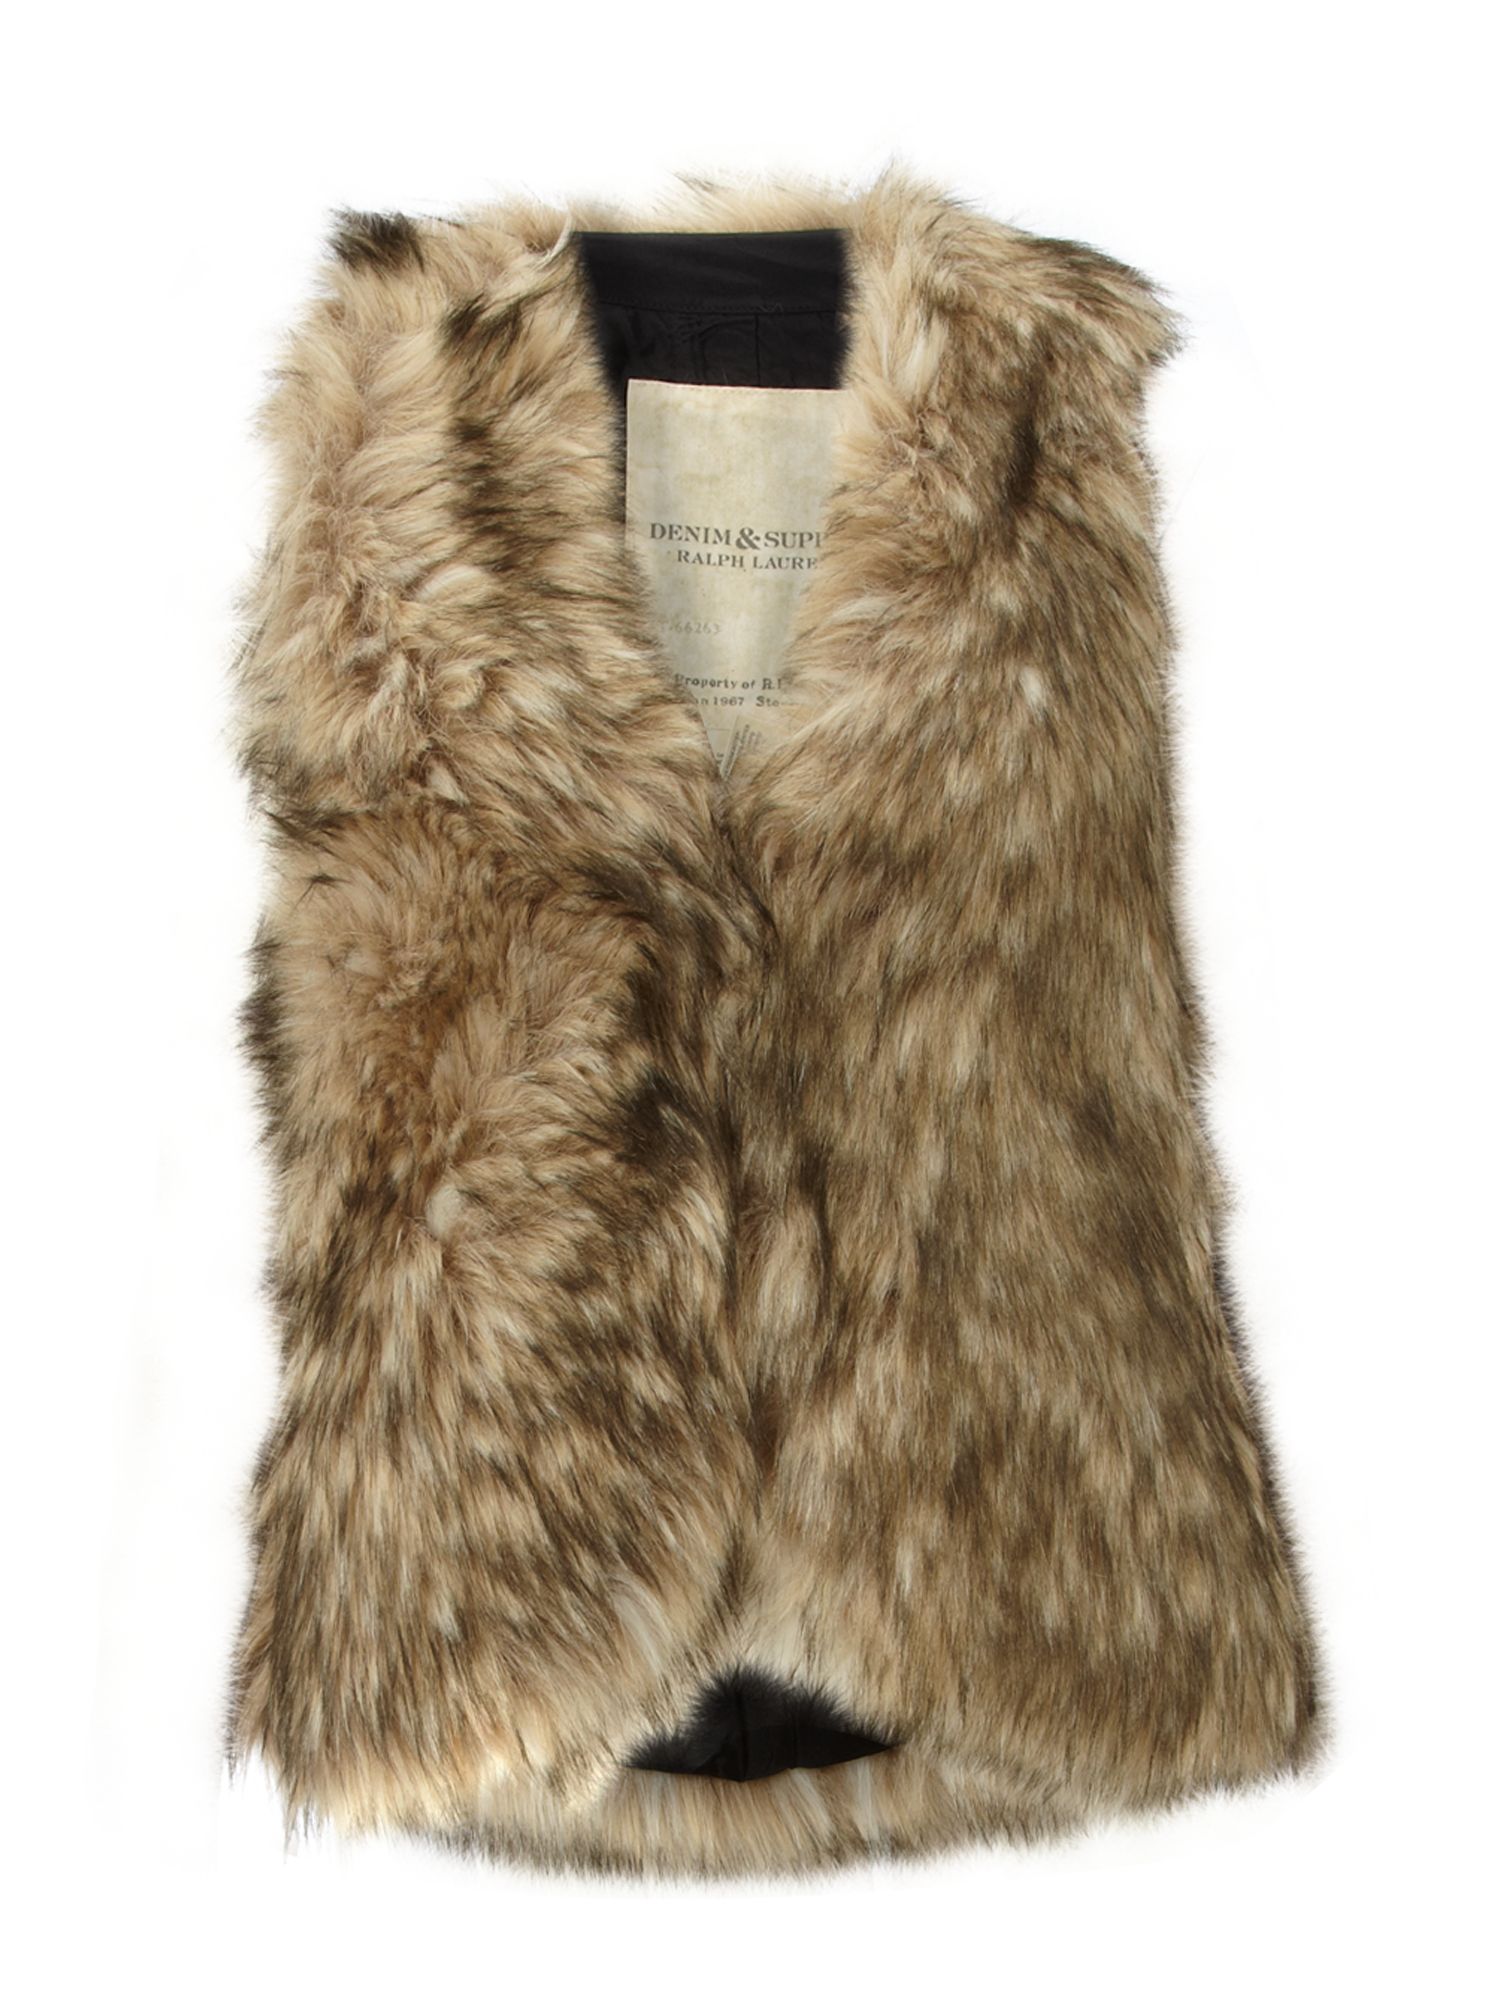 Denim & supply ralph lauren Faux Fur Gilet in Brown | Lyst